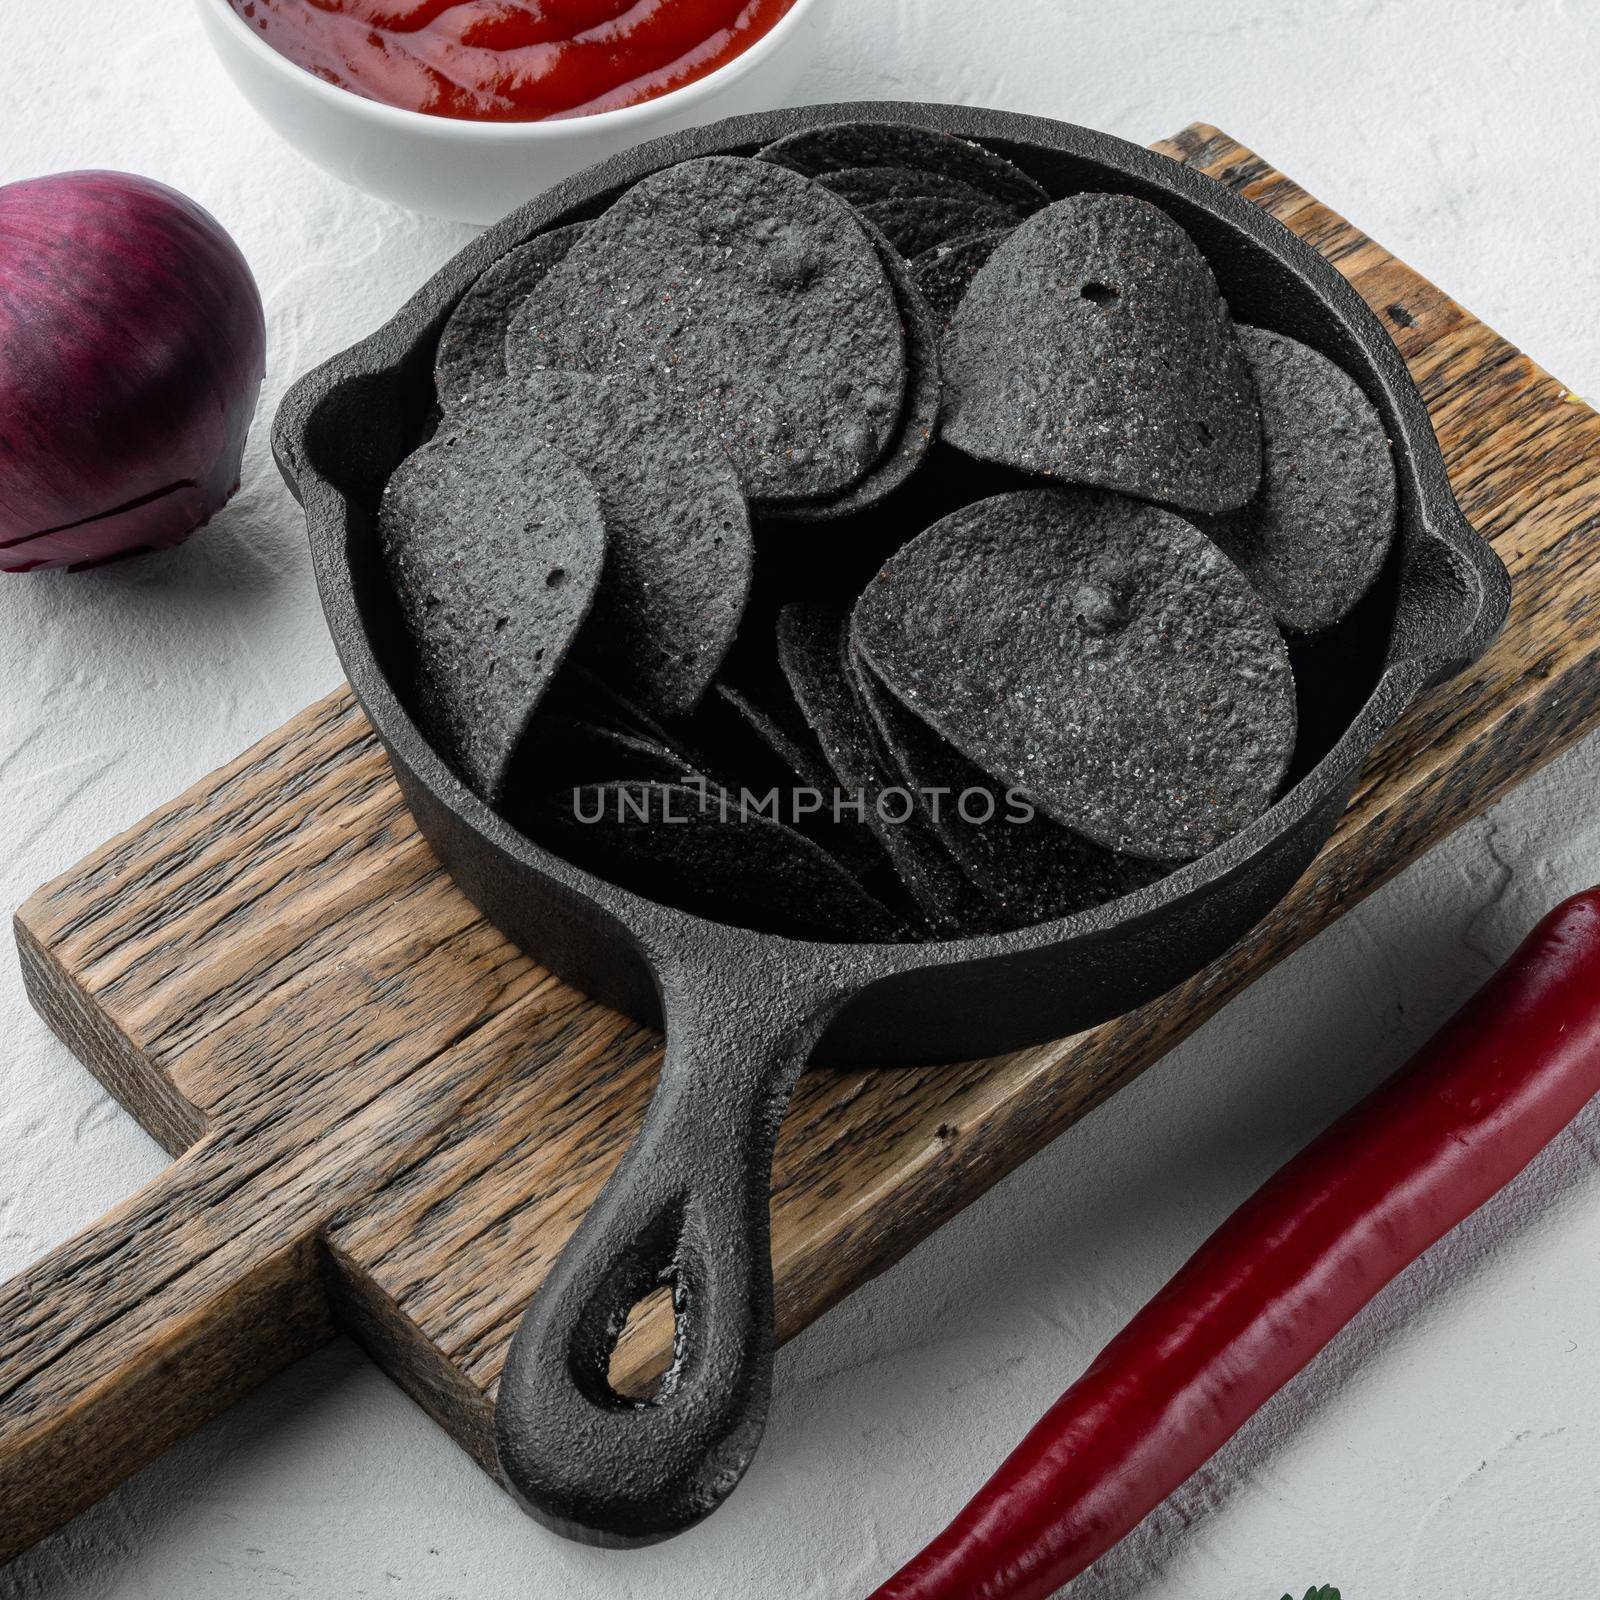 Black crispy potato chips set, in cast iron frying pan, on white stone surface